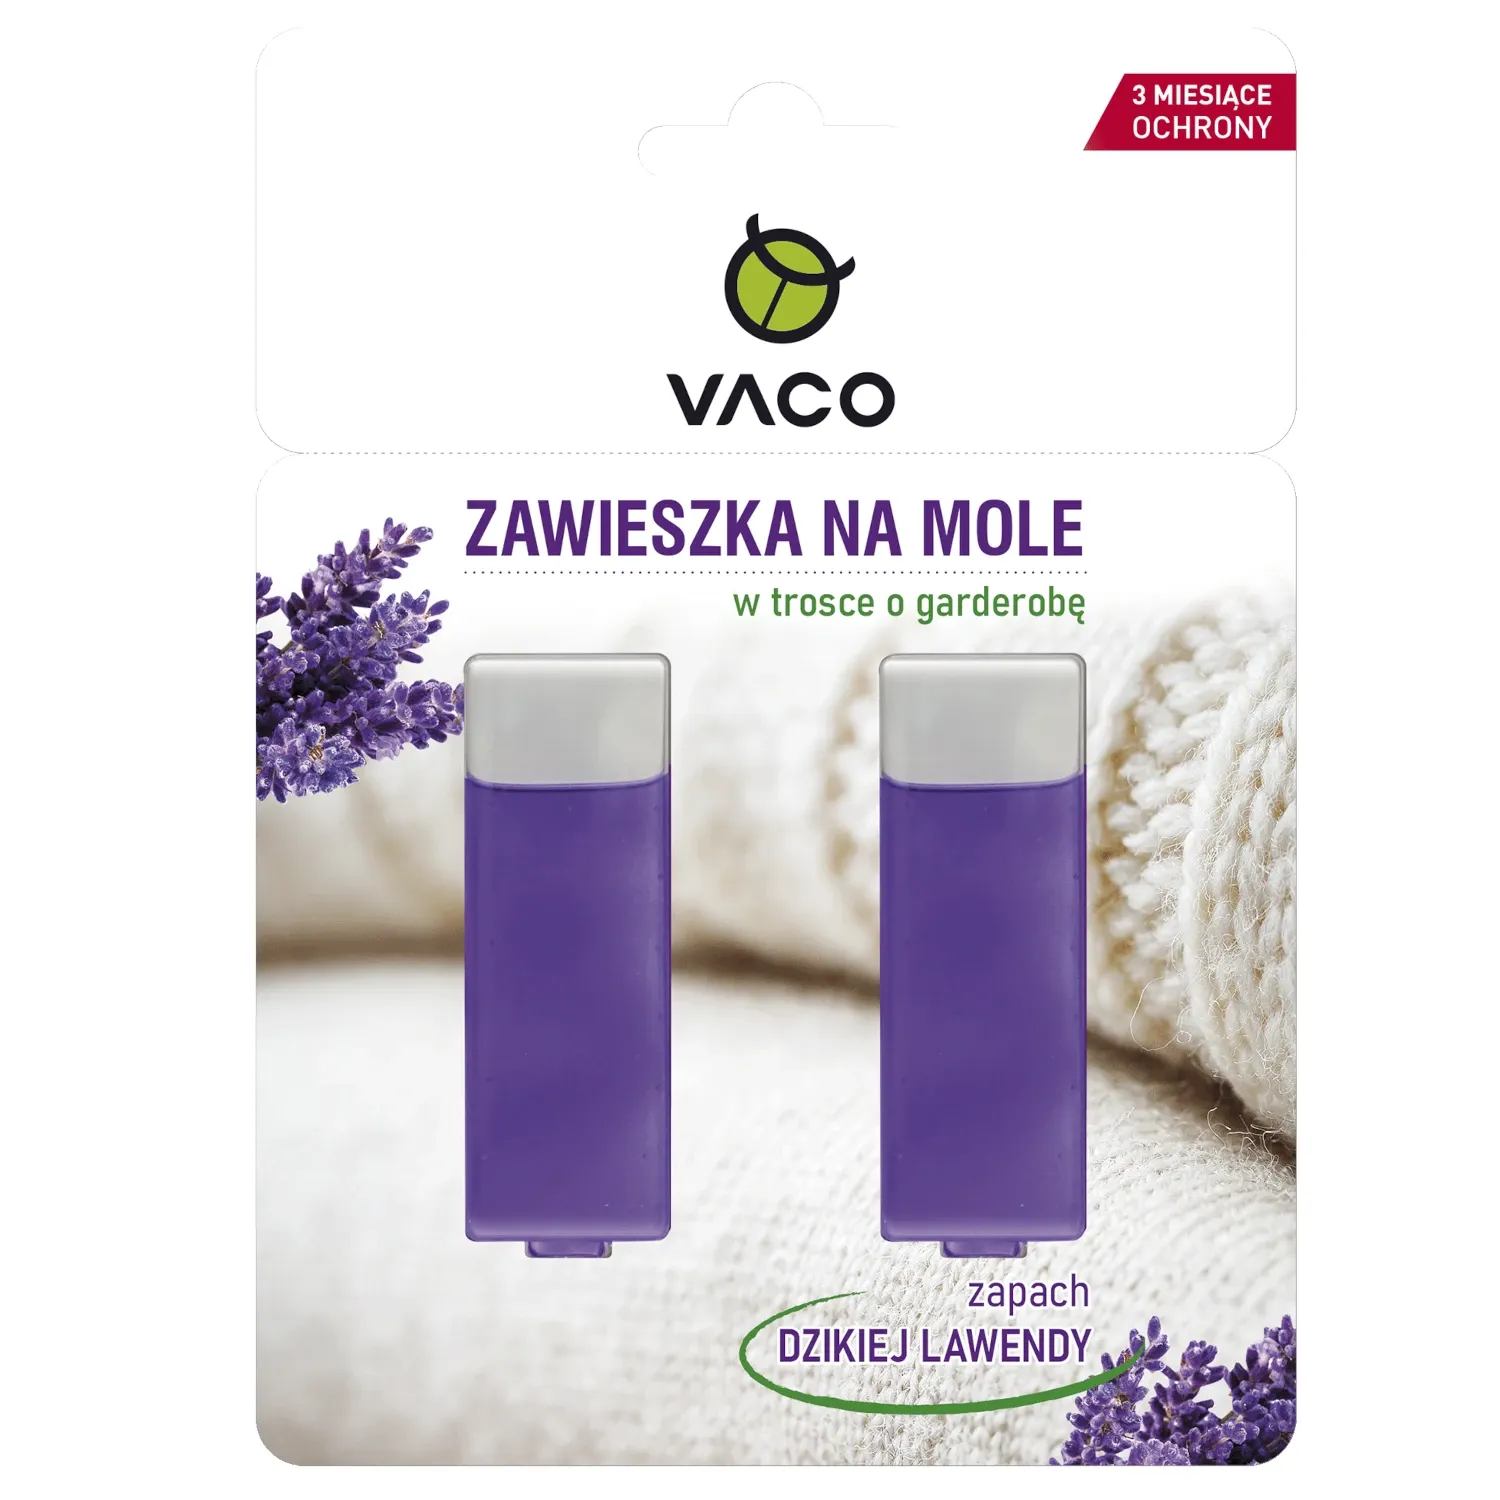 VACO Mole pendant gel (Lavender) 2 pcs.